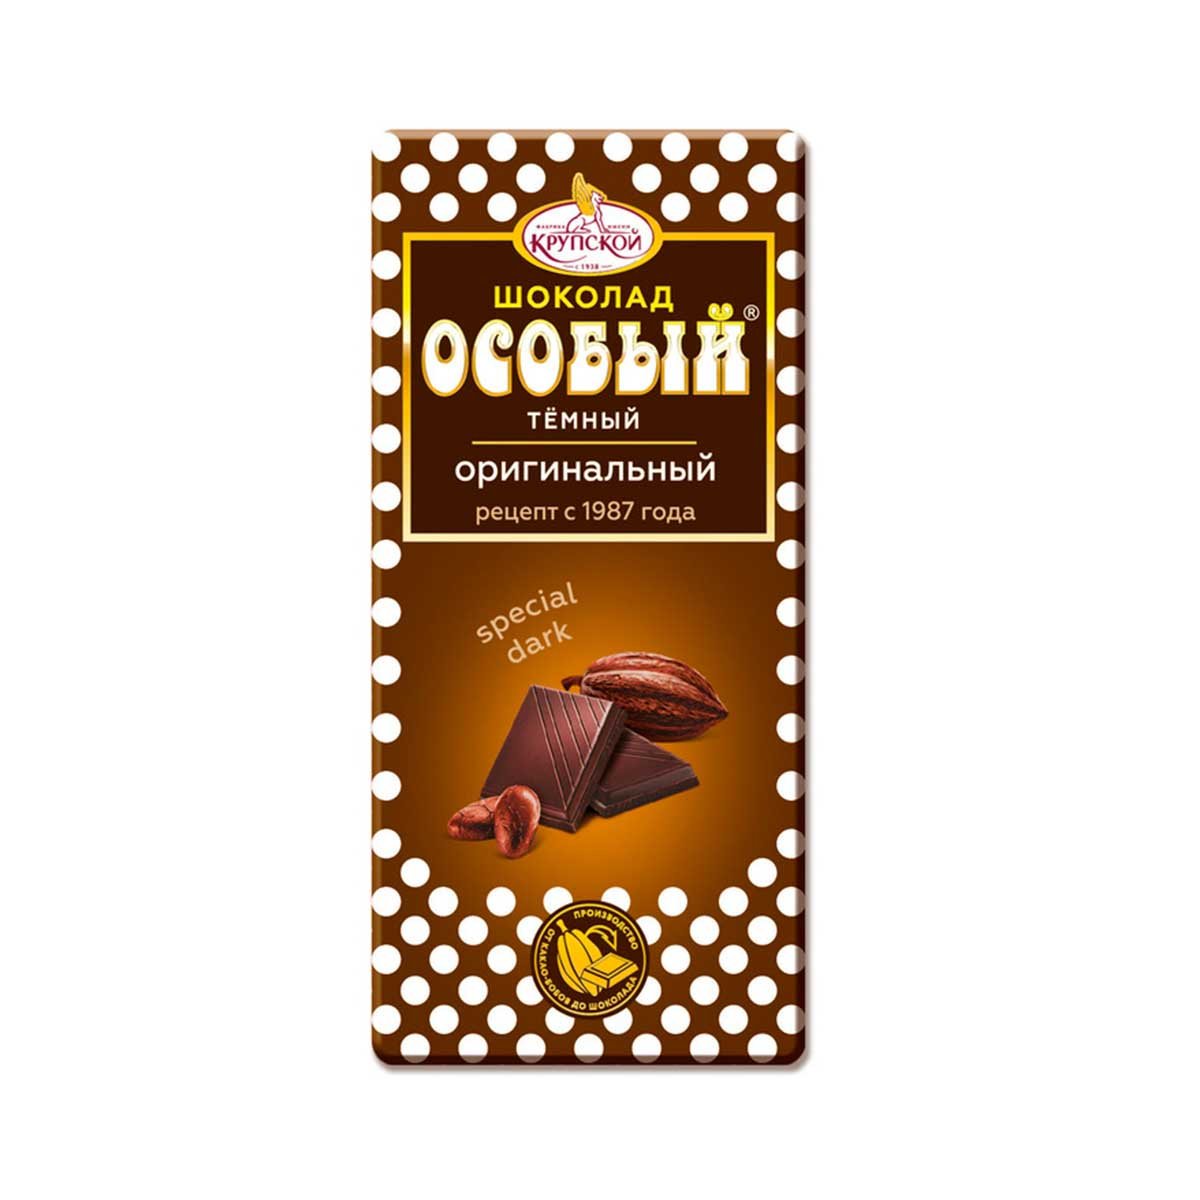 15 грамм шоколада. Особый шоколад тёмный 90г Крупской. Шоколад особый темный 90гр 1/15шт Крупской. Шоколад тёмный "особый" 90гр.. Шоколад особый Славянка 90г.